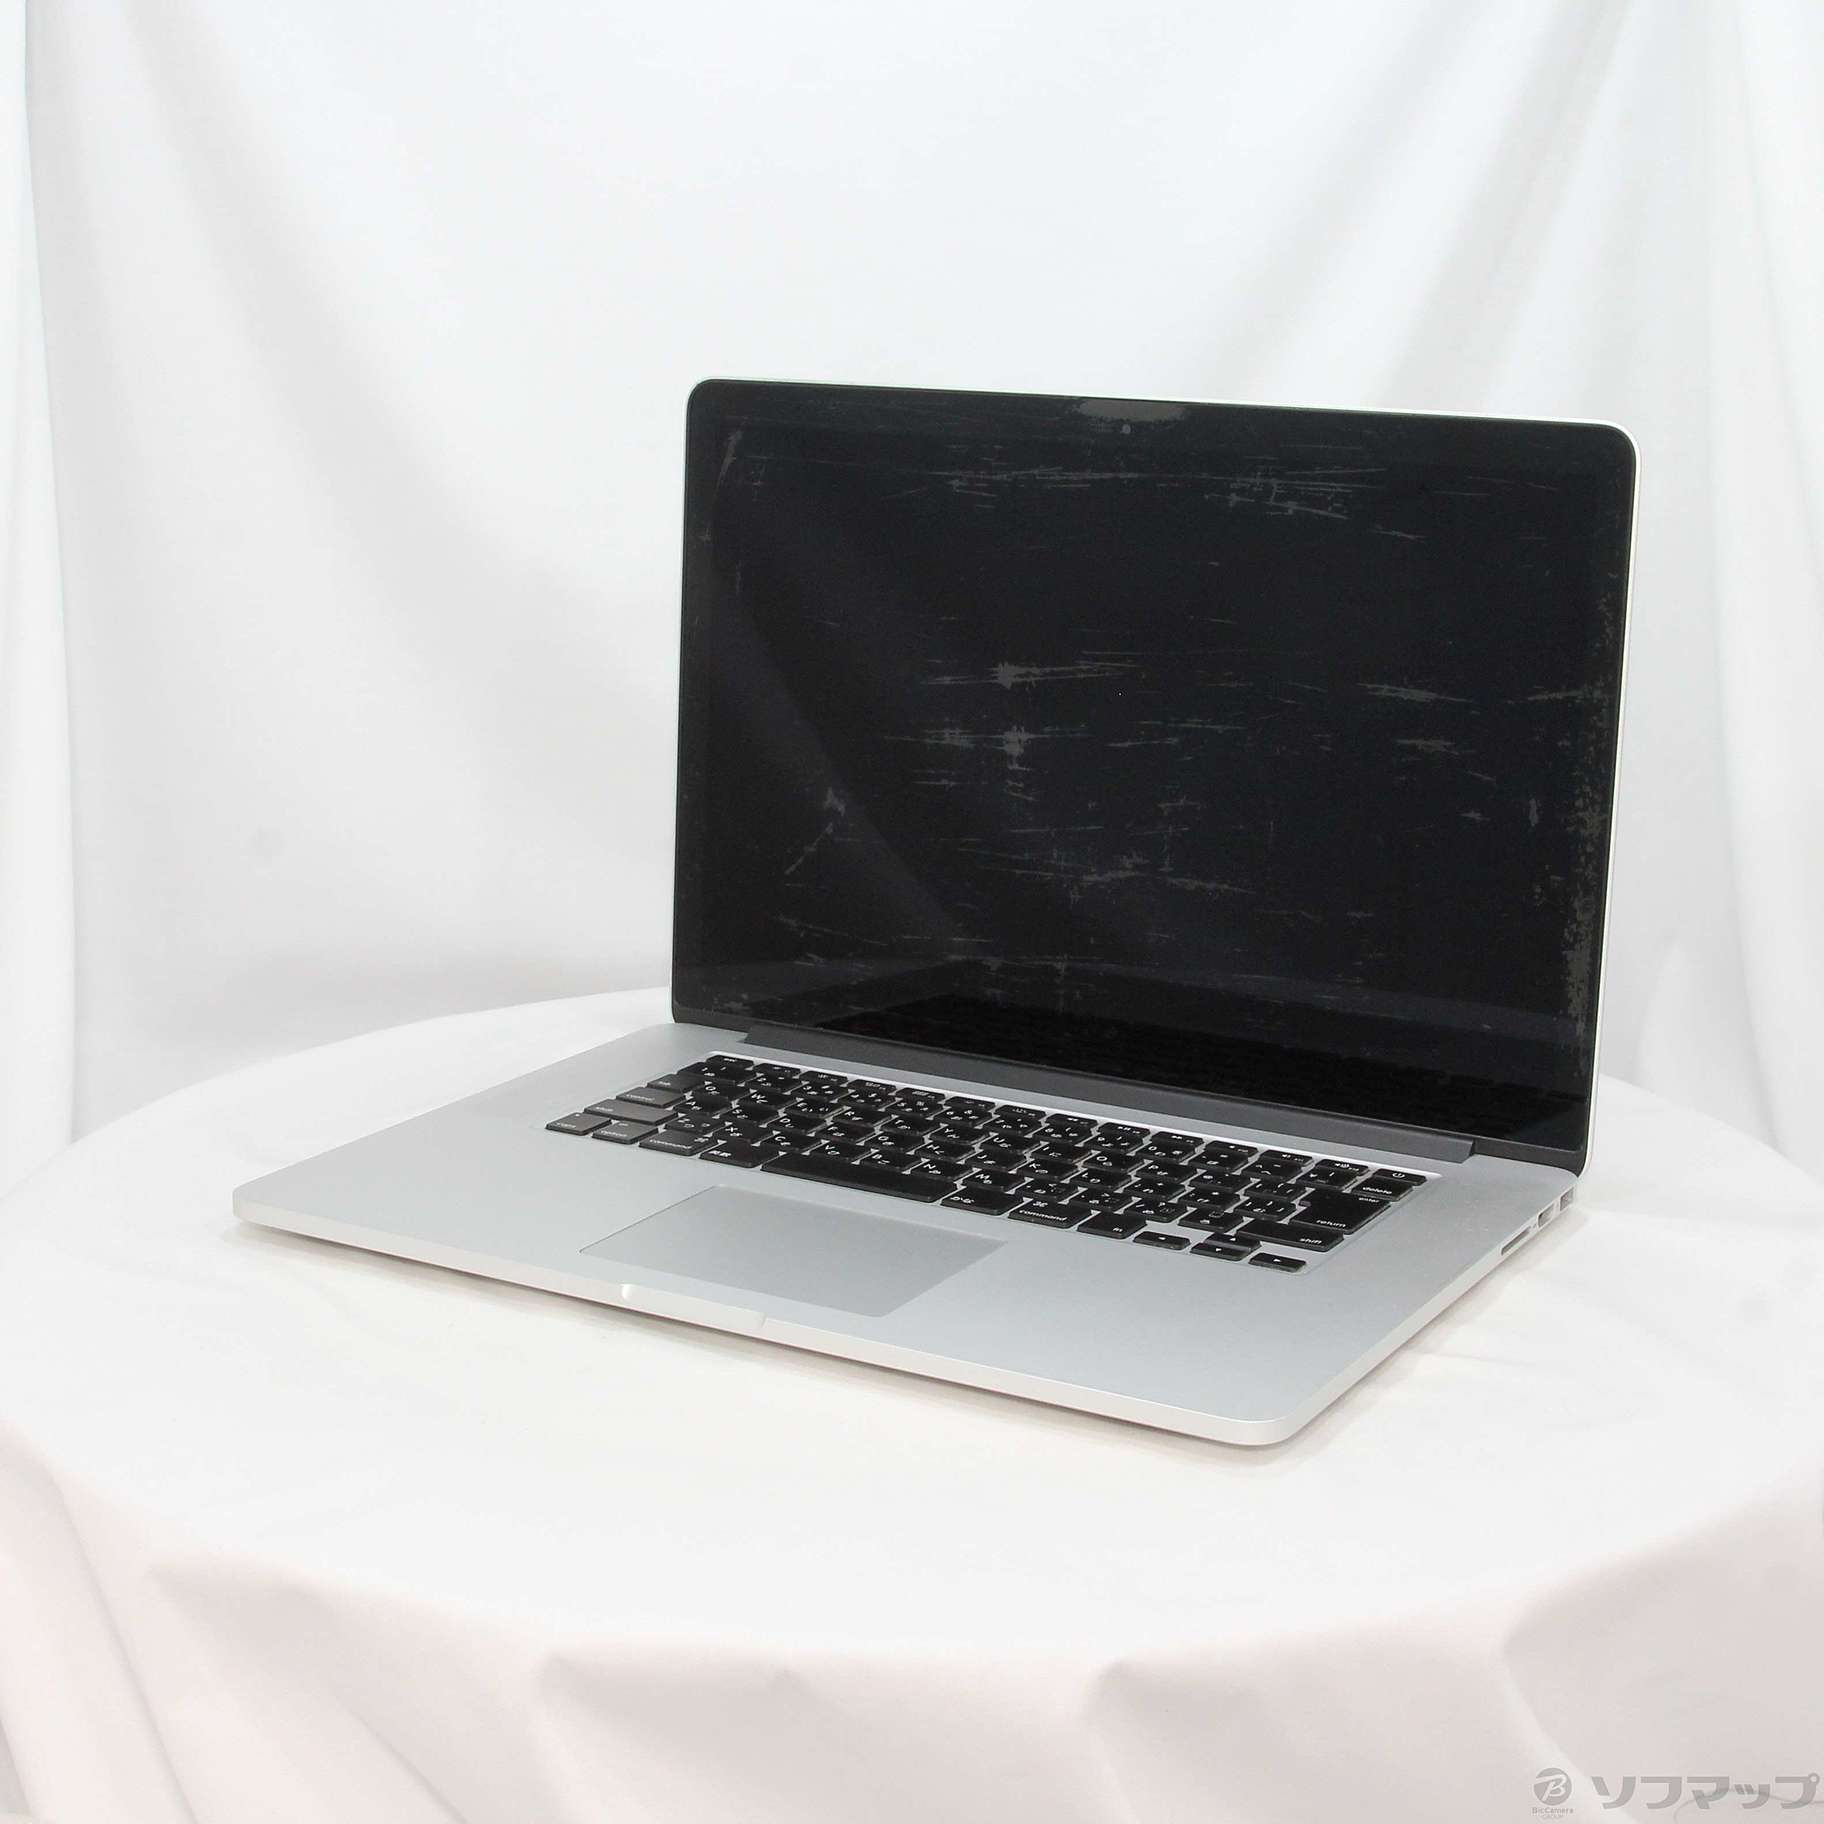 中古】MacBook Pro 15-inch Mid 2012 MC975J／A Core_i7 2.3GHz 8GB